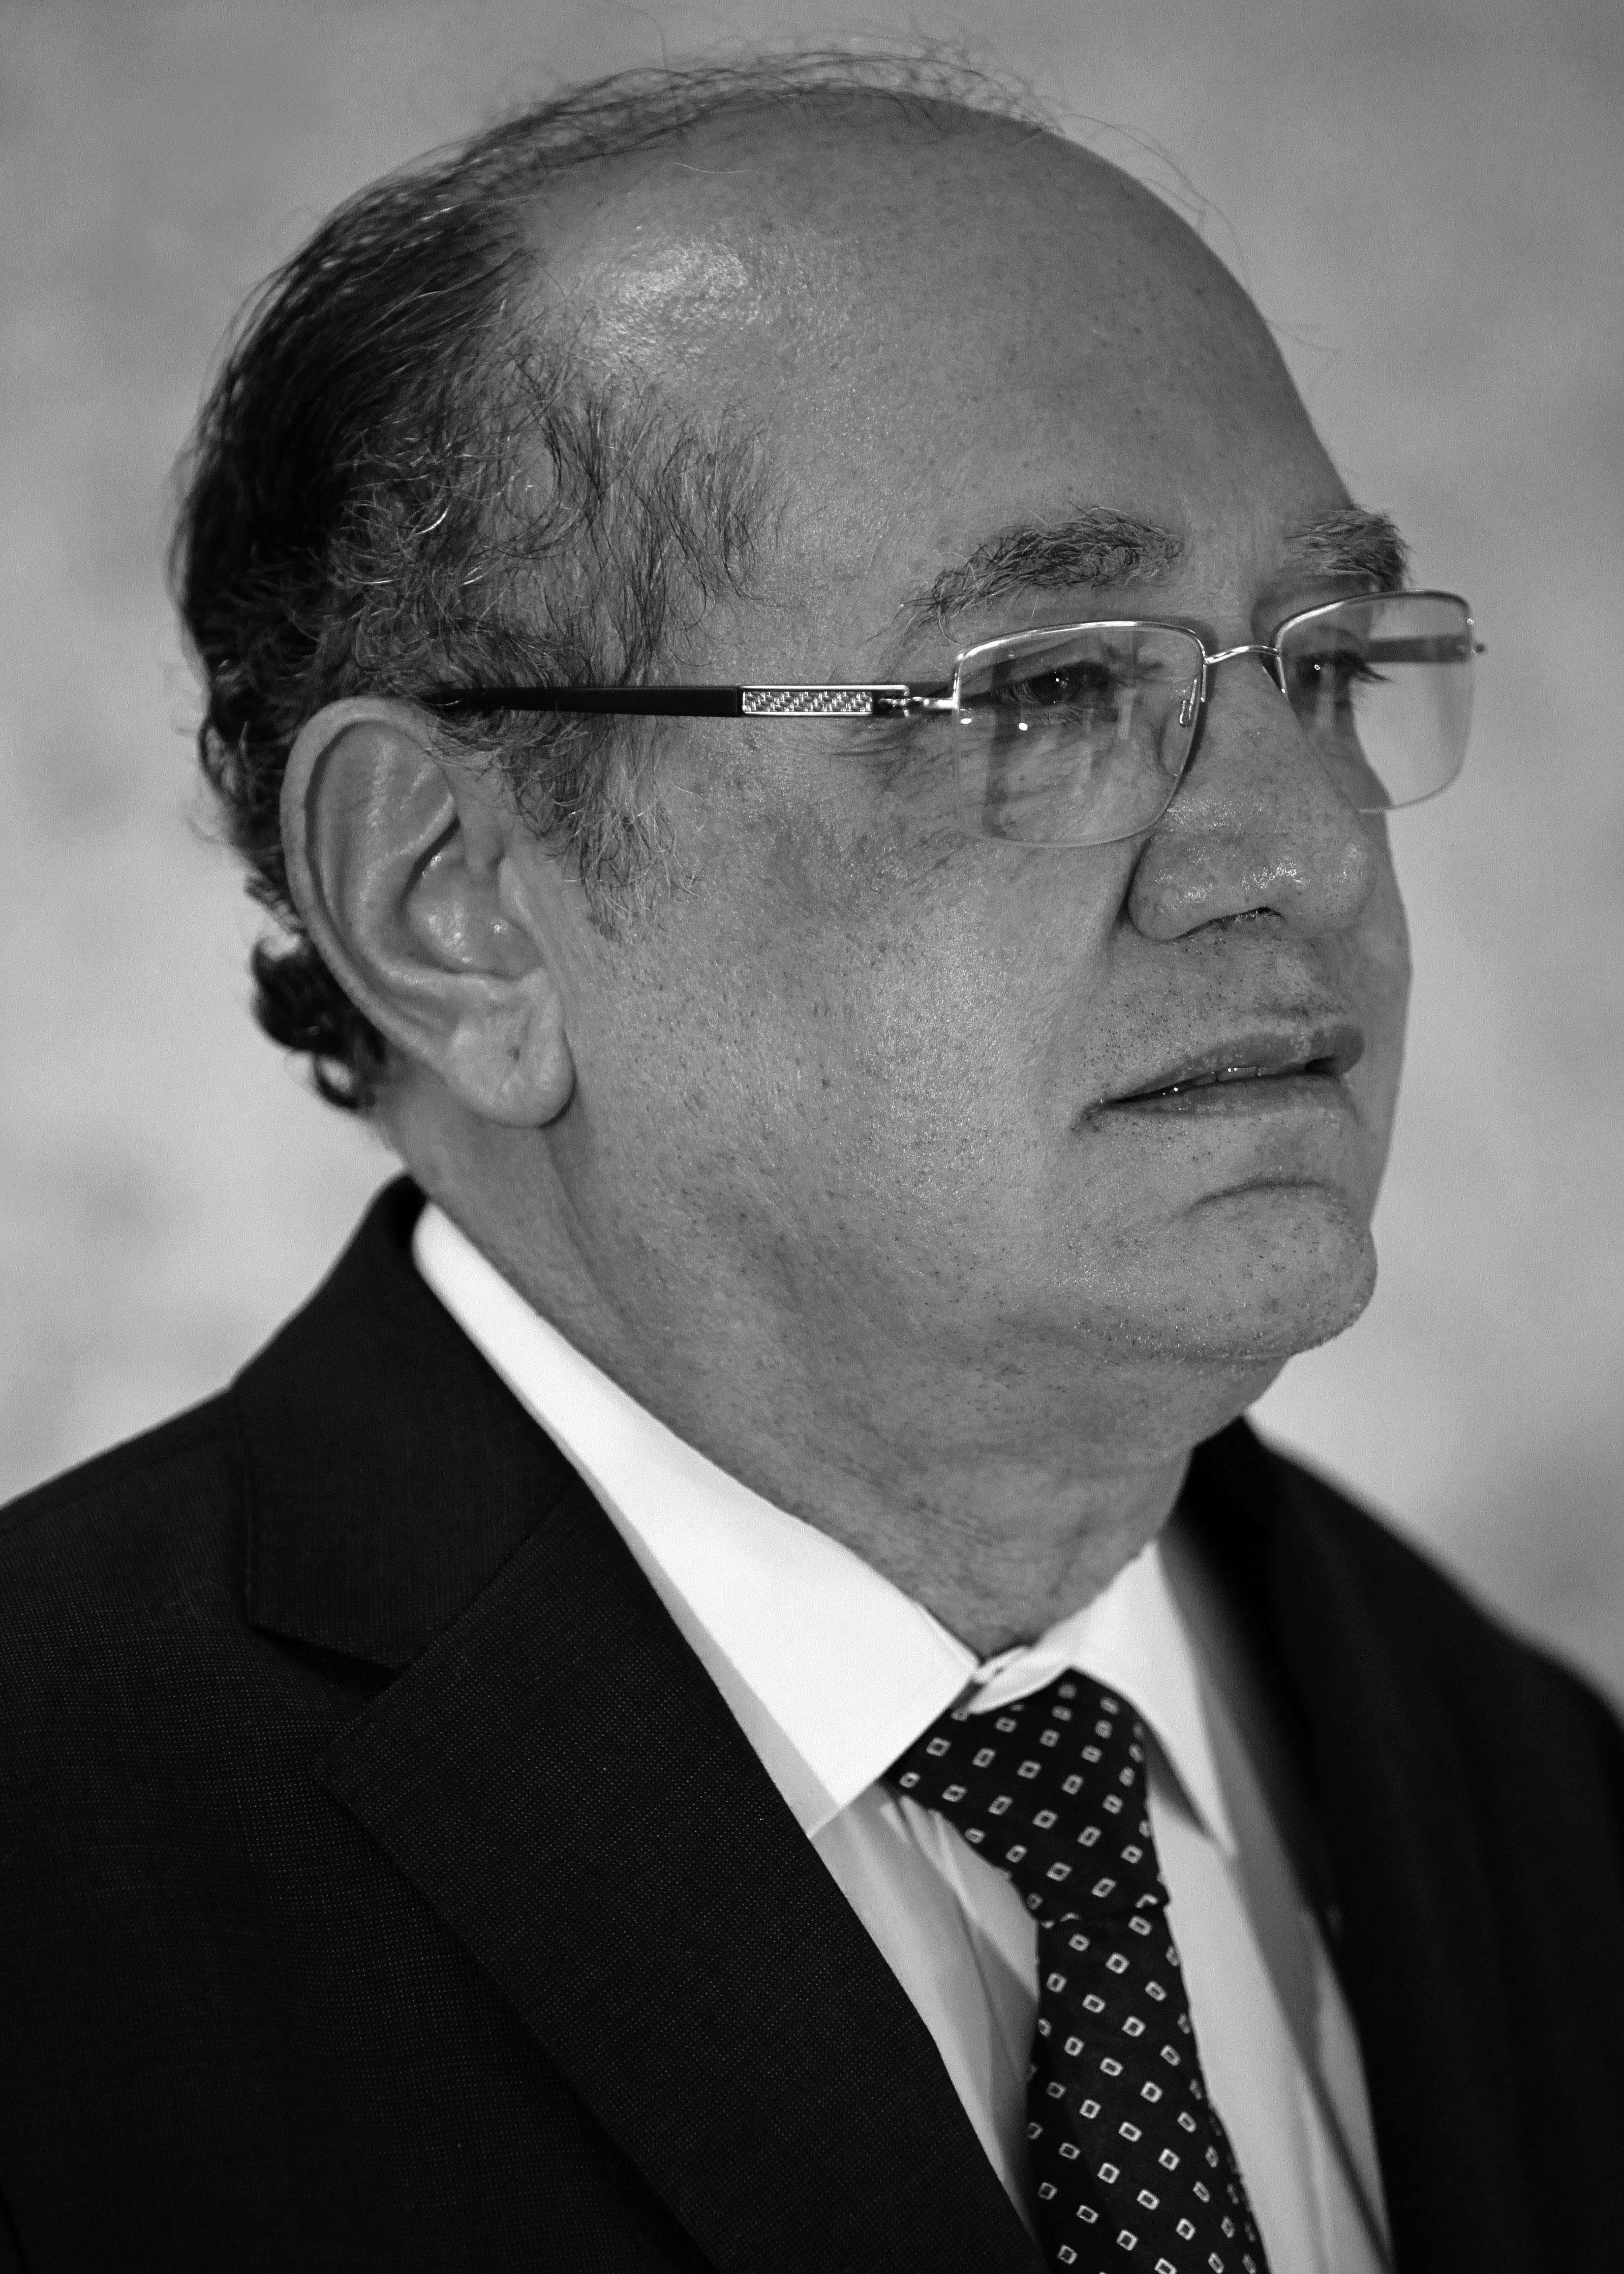 Gilmar Mendes
2008 - 2010